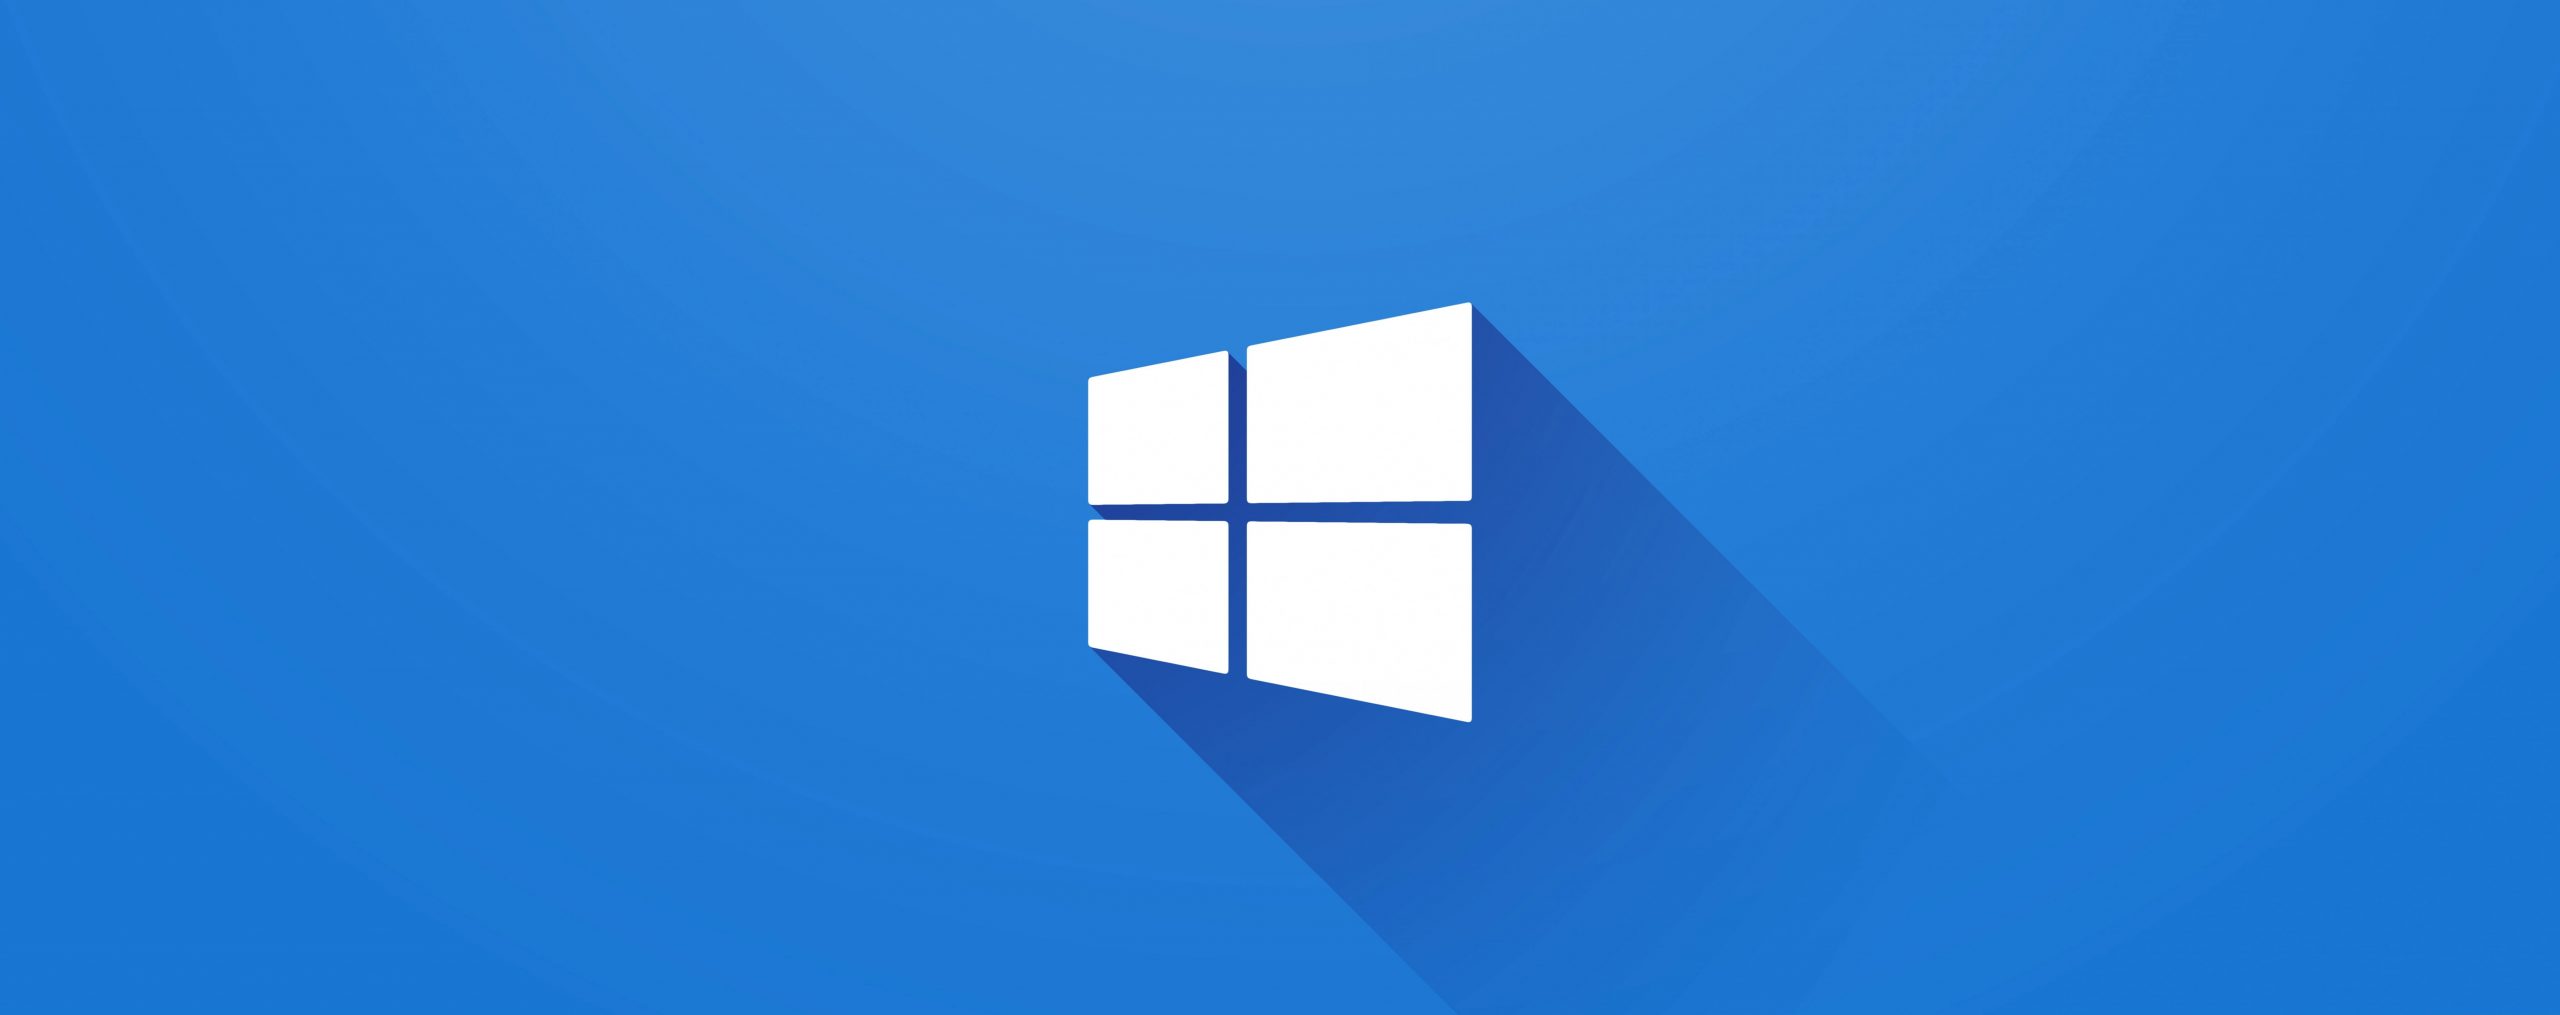 Windows 10 Logo wallpaper, Microsoft Windows logo, white, blue, mario bros